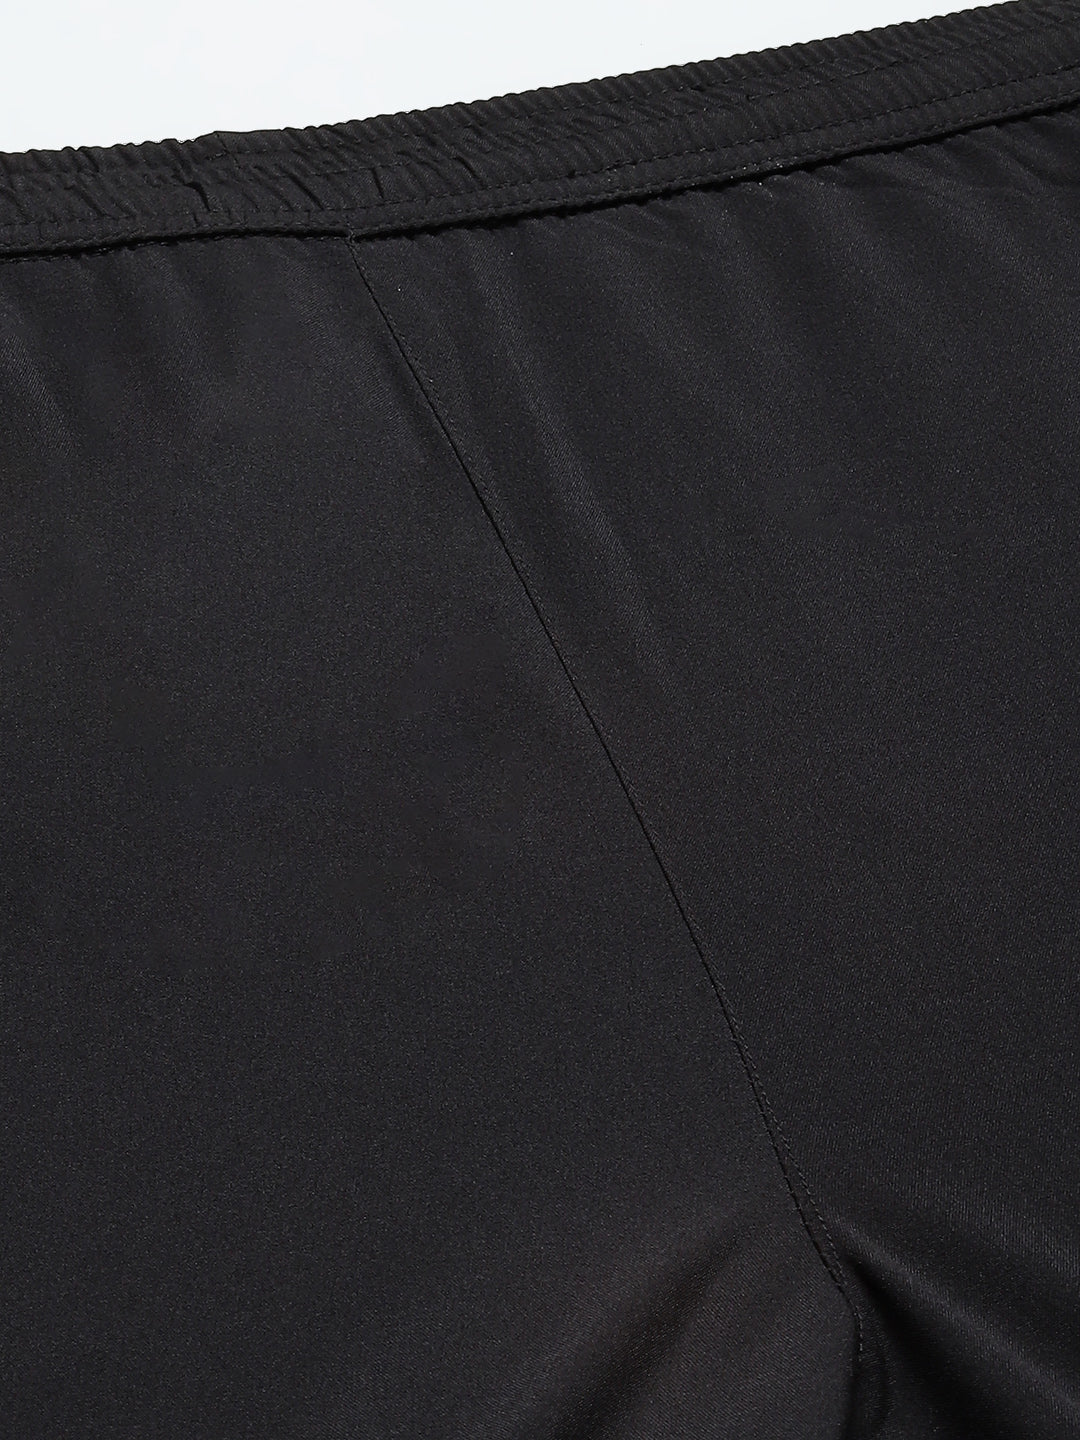 KaLI_store Work Pants for Men Menâ€˜s Joggers Sweatpants - Fashion Cargo Pants  Gym Track Pants Slim Comfortable Trousers Black,L - Walmart.com